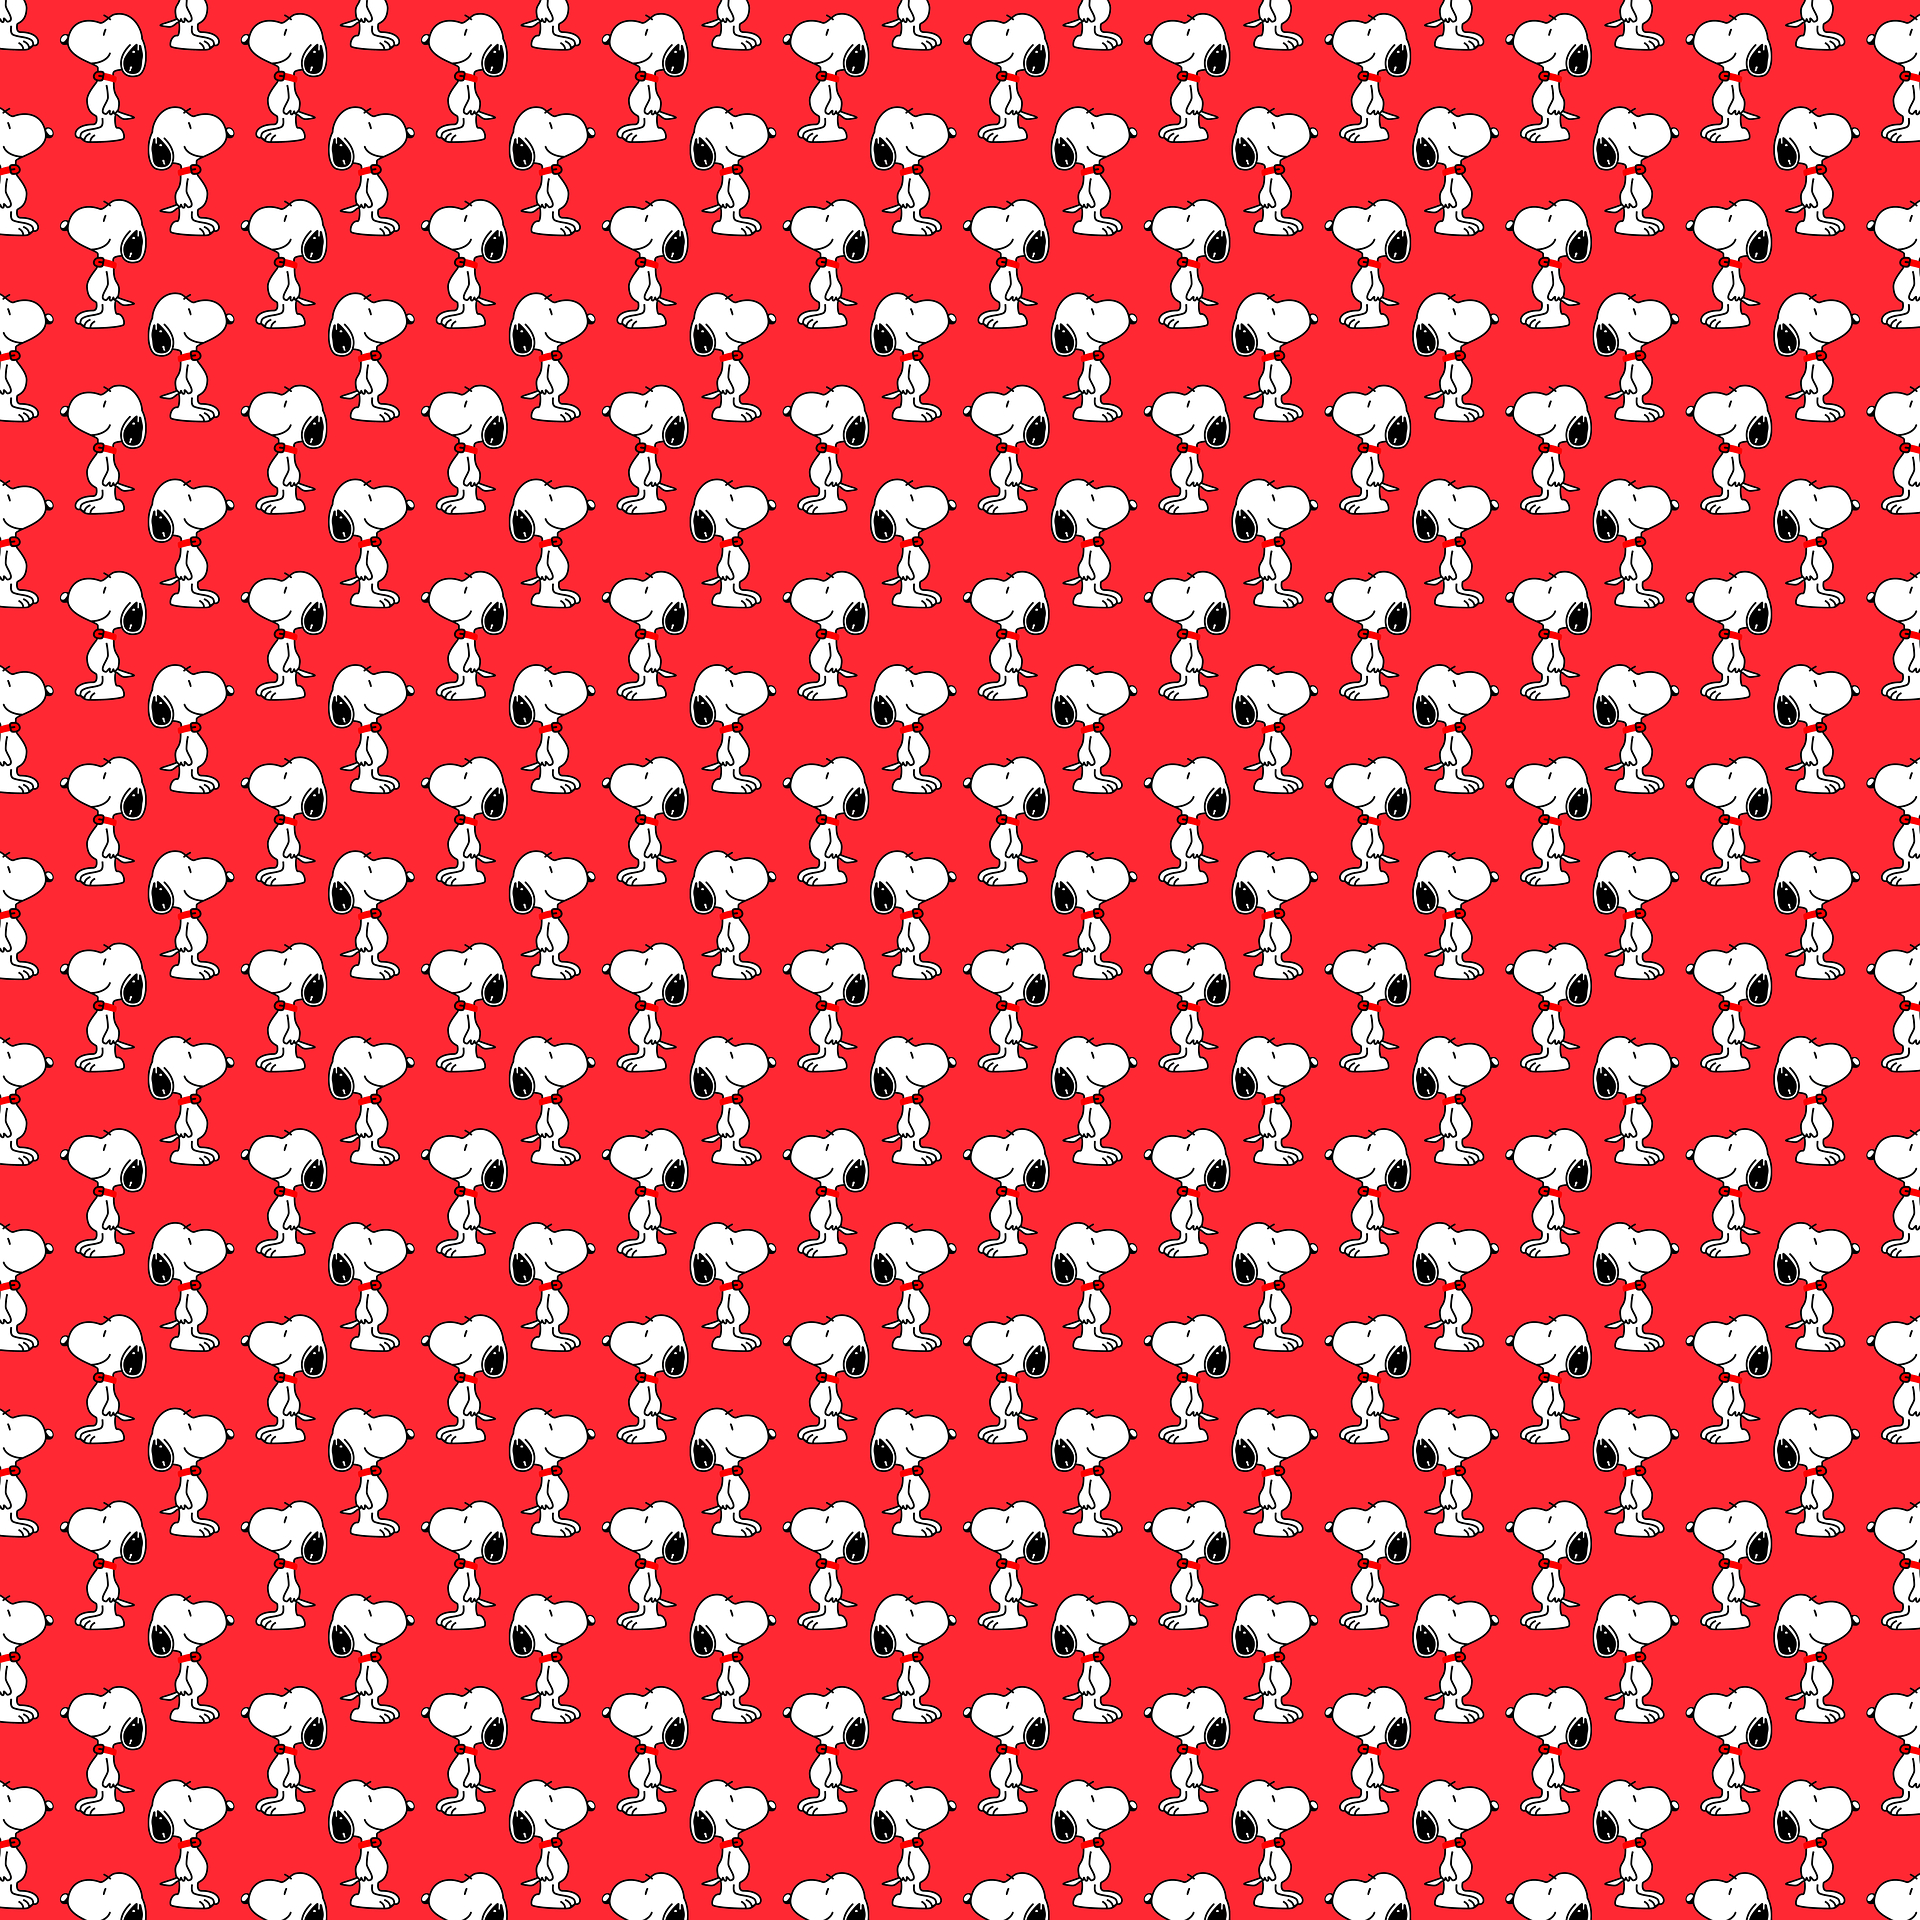 1920x1920 Snoopy wallpaper Jigsaw Puzzle Online Jigsaw 365